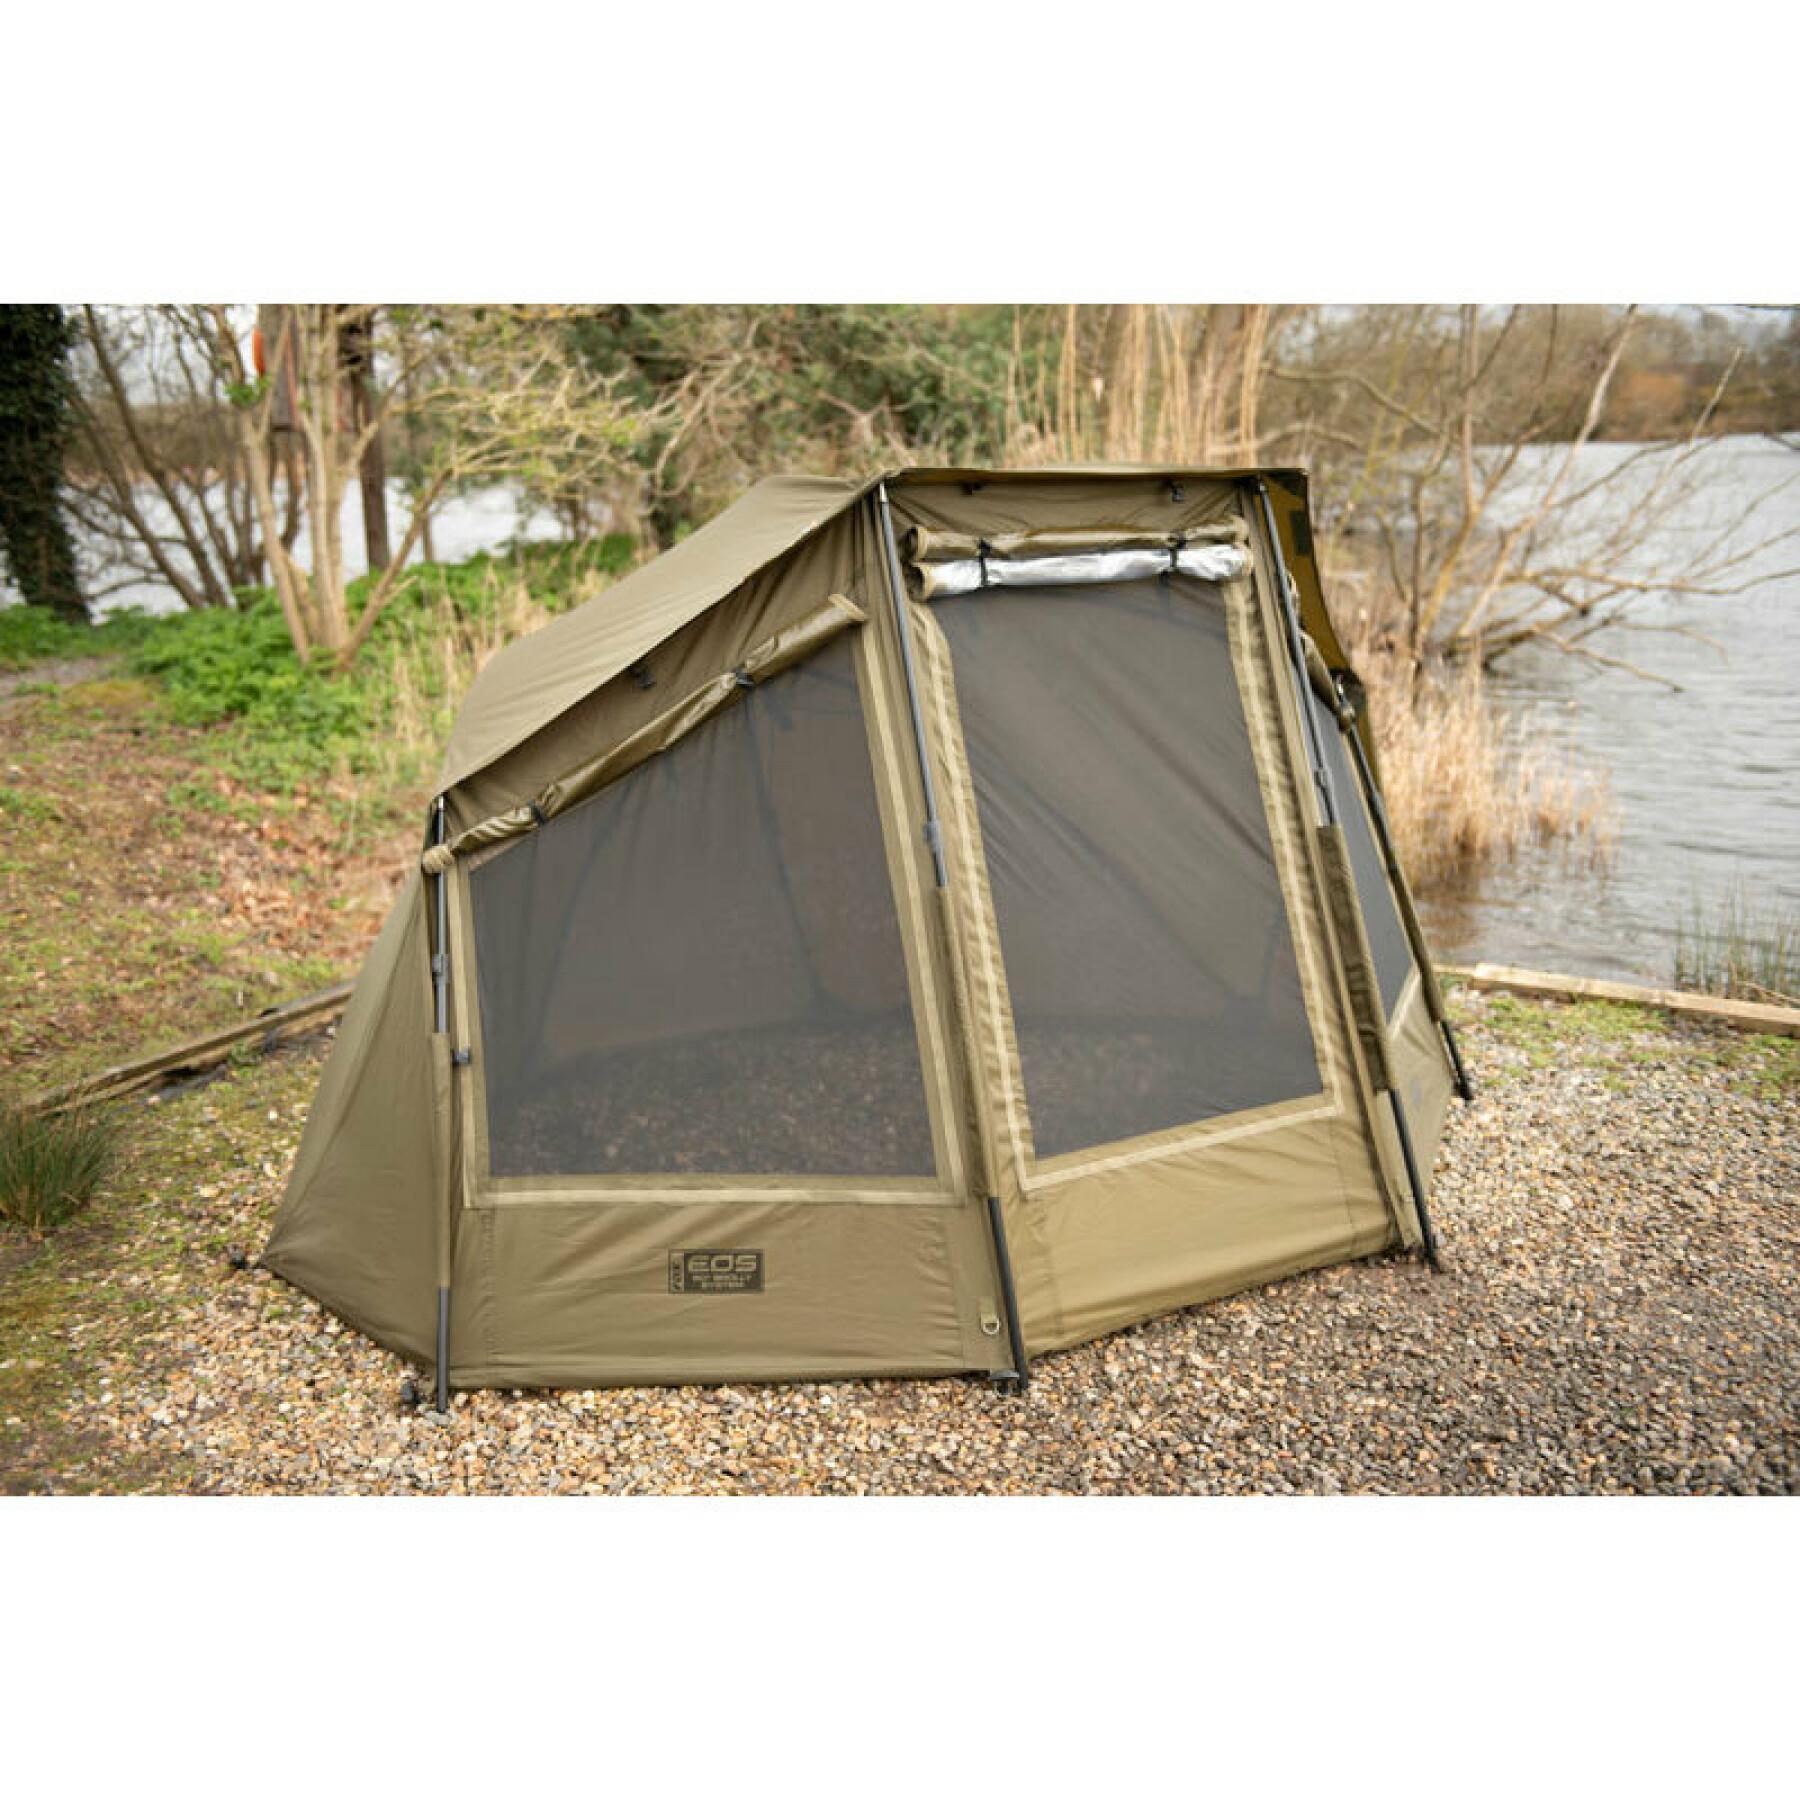 System tent Fox Eos brolly